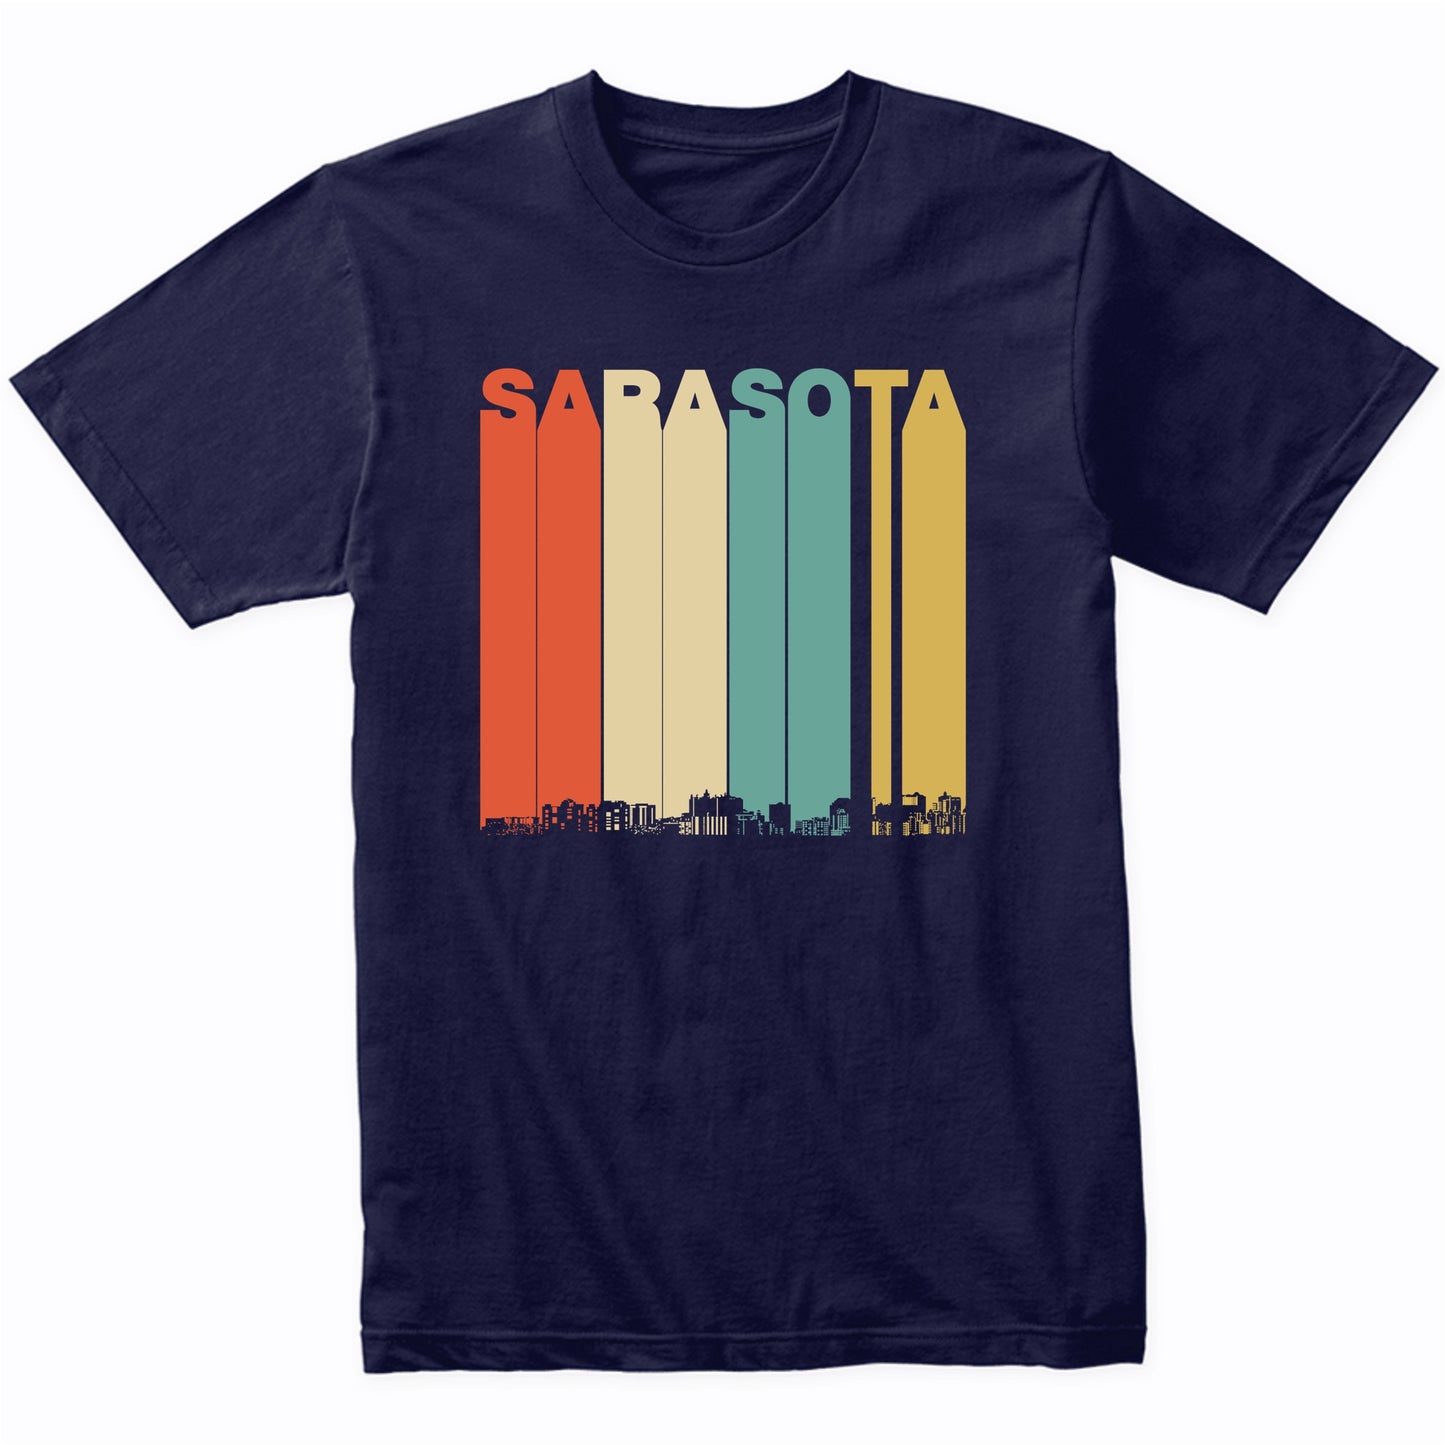 Vintage 1970's Style Sarasota Florida Skyline T-Shirt